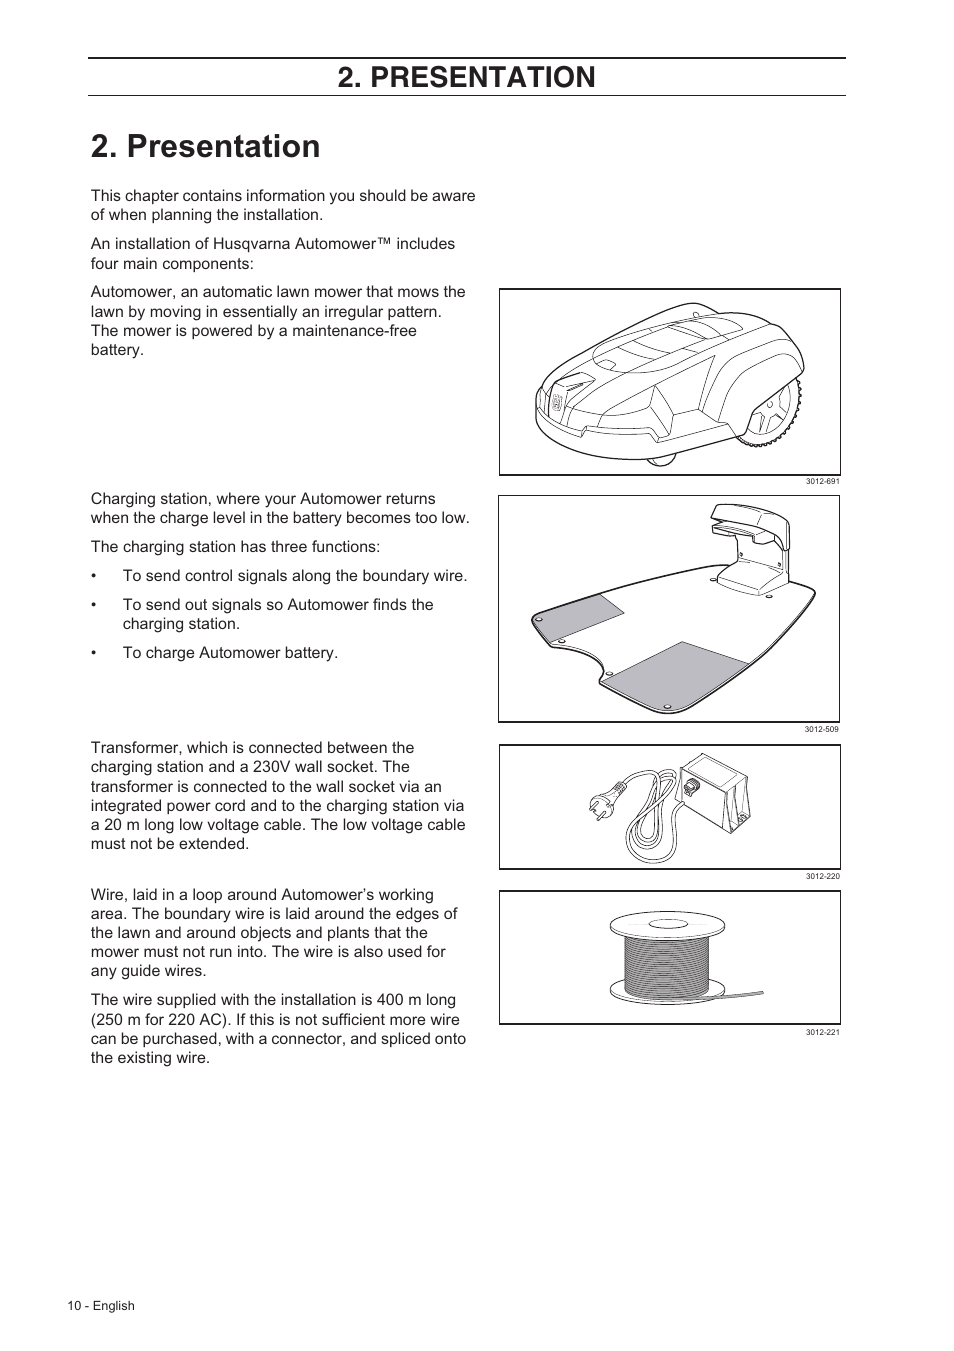 Presentation | Husqvarna 220 AC User Manual | Page 9 / 82